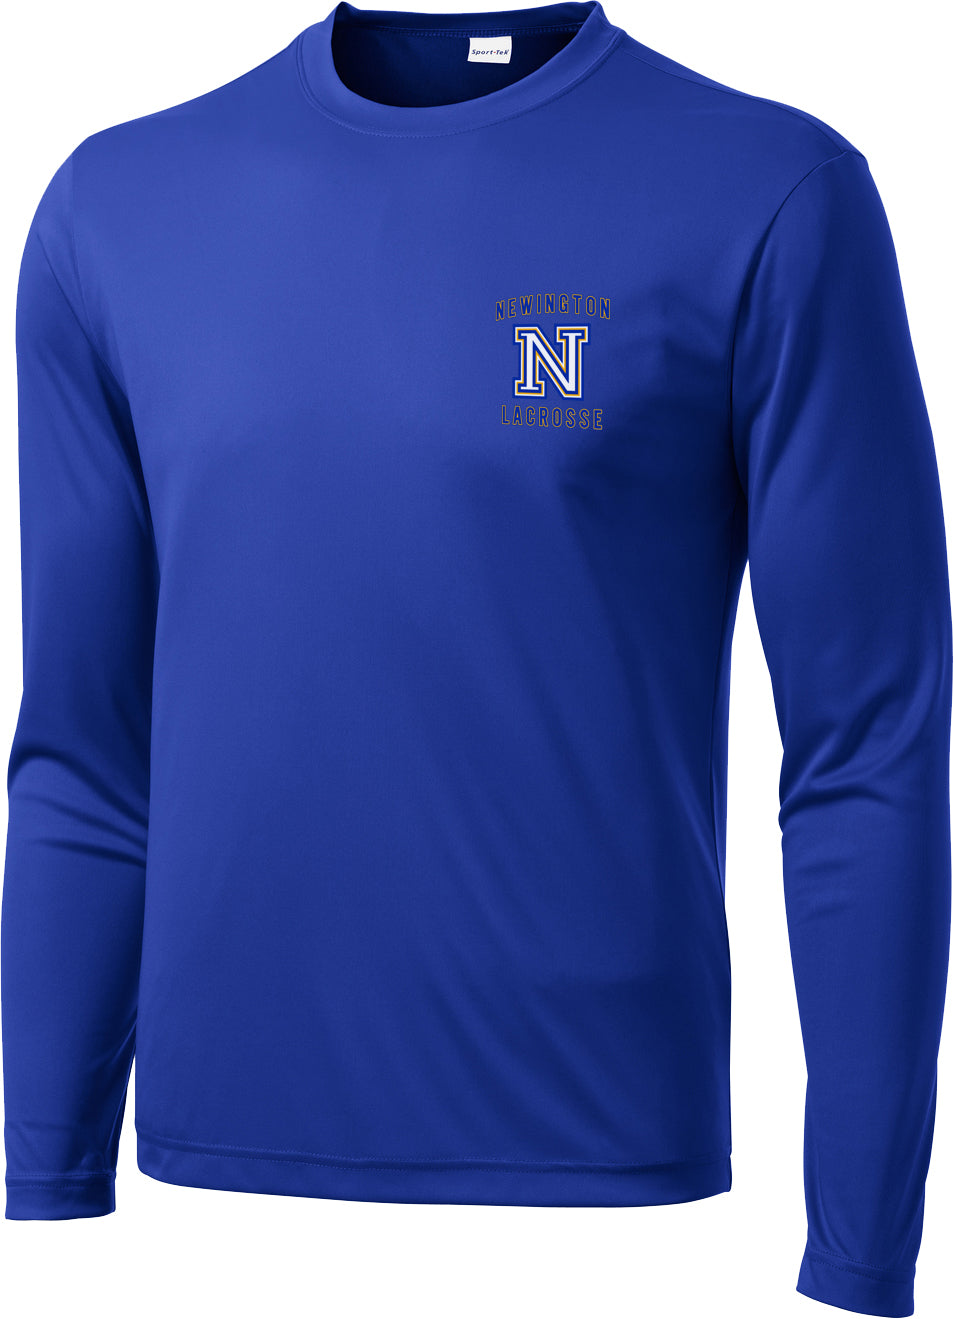 Newington Lacrosse Royal Long Sleeve Performance Shirt